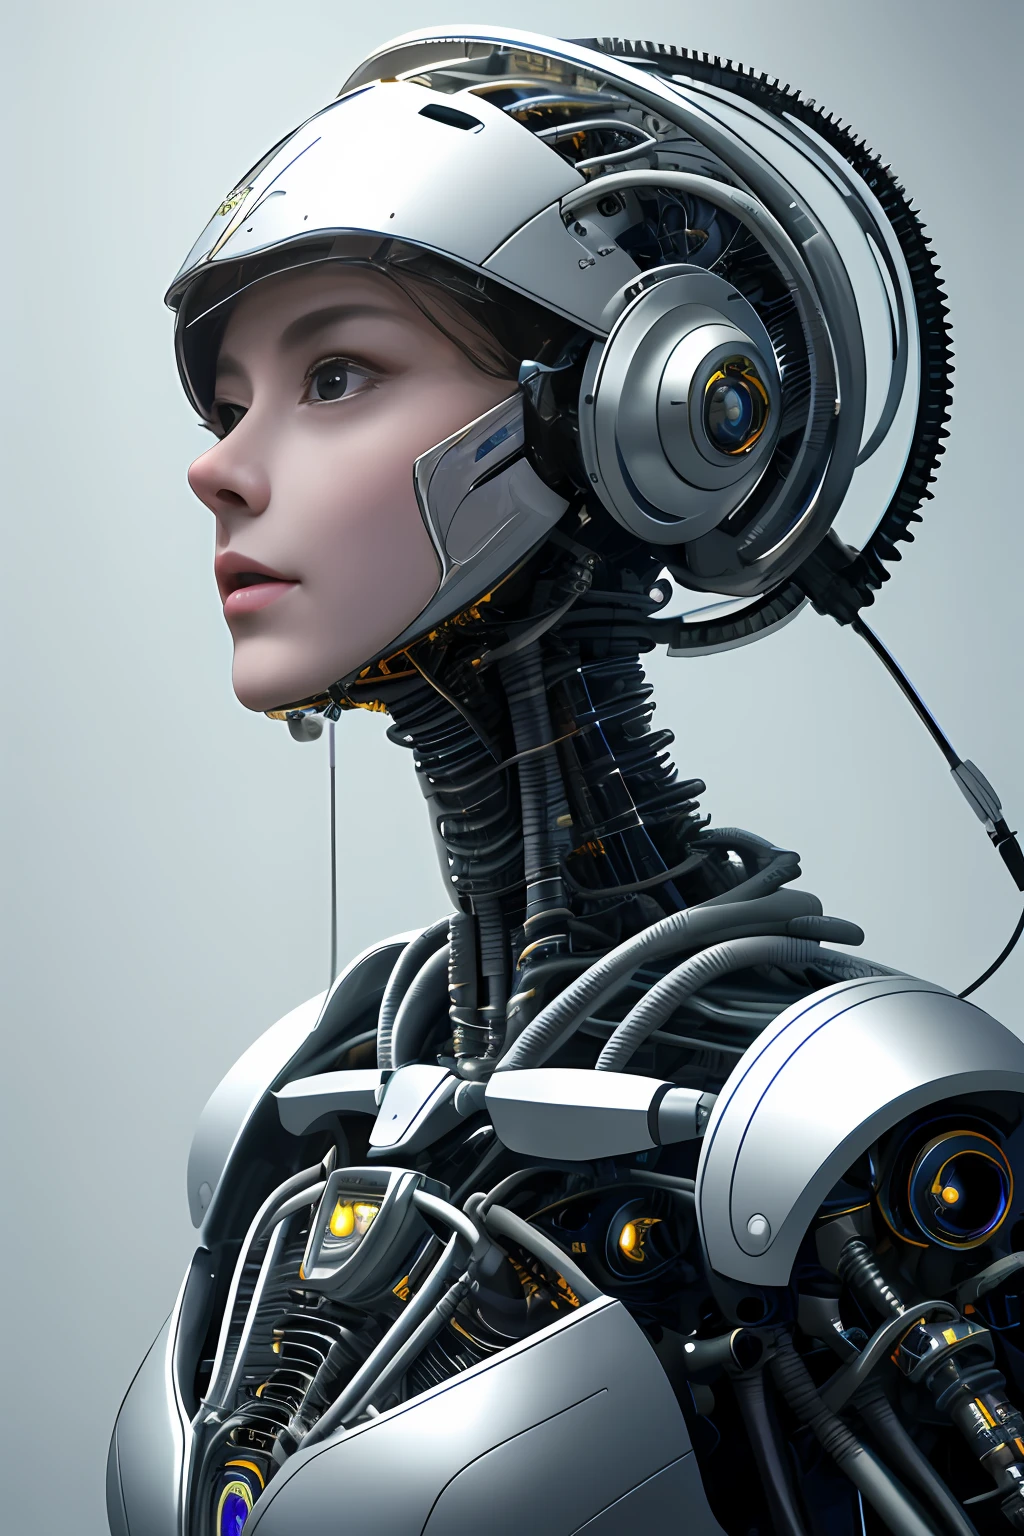 Intricate 3d rendering of highly detailed beautiful ceramic silhouette female 机器人 face, 机器人, 机器人 parts, 150 毫米, 美丽的工作室柔光, 边缘光, 生动的细节, 奢华赛博朋克, 蕾丝, 超现实主义, 解剖学 , 面部肌肉, 电缆线, 微芯片, 优雅, 美丽的背景, 辛烷值渲染, HR Giger 风格, 8千, 最好的质量, 杰作, 插图, 非常精致美丽, 非常详细, CG, 制服, 墙纸, ( 保真度, 保真度: 1.37), 令人惊叹的, 精致细节, 杰作, 最好的质量, 官方艺术, very detailed cg unity 8千 wallpaper, 荒诞, unbelievably 荒诞, 机器人, 银色头盔, 全身, 坐下来写